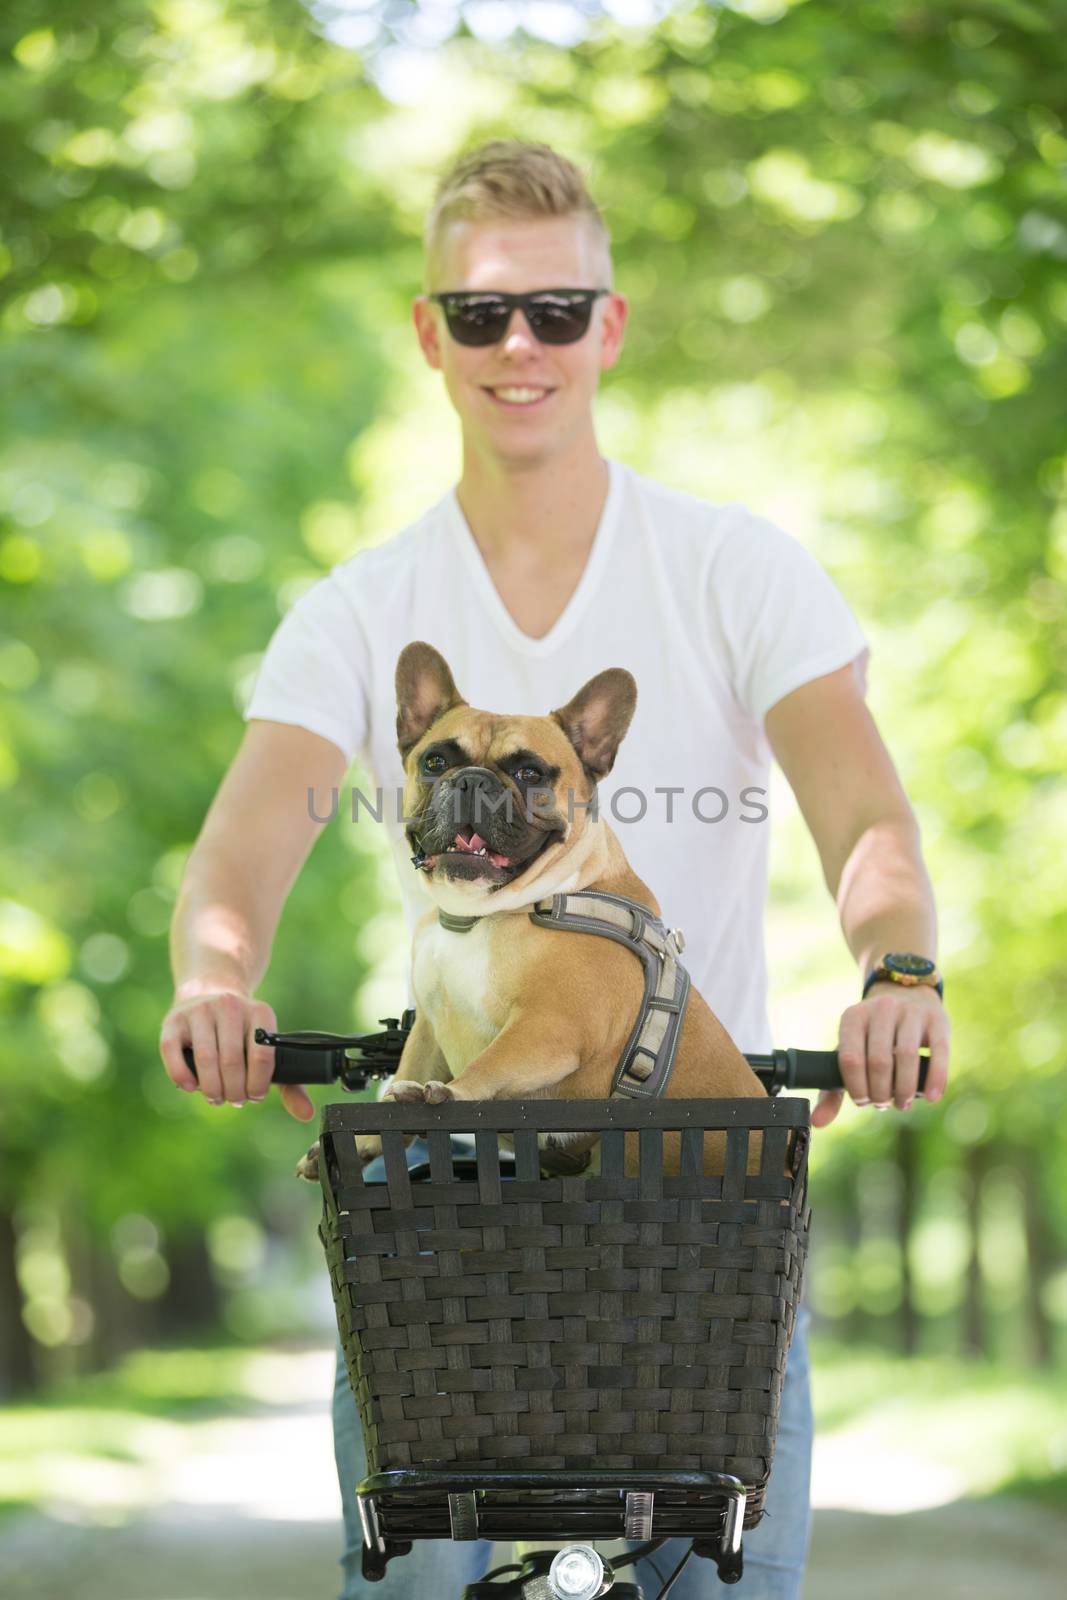 French bulldog dog enjoying riding in bicycle basket in city park.